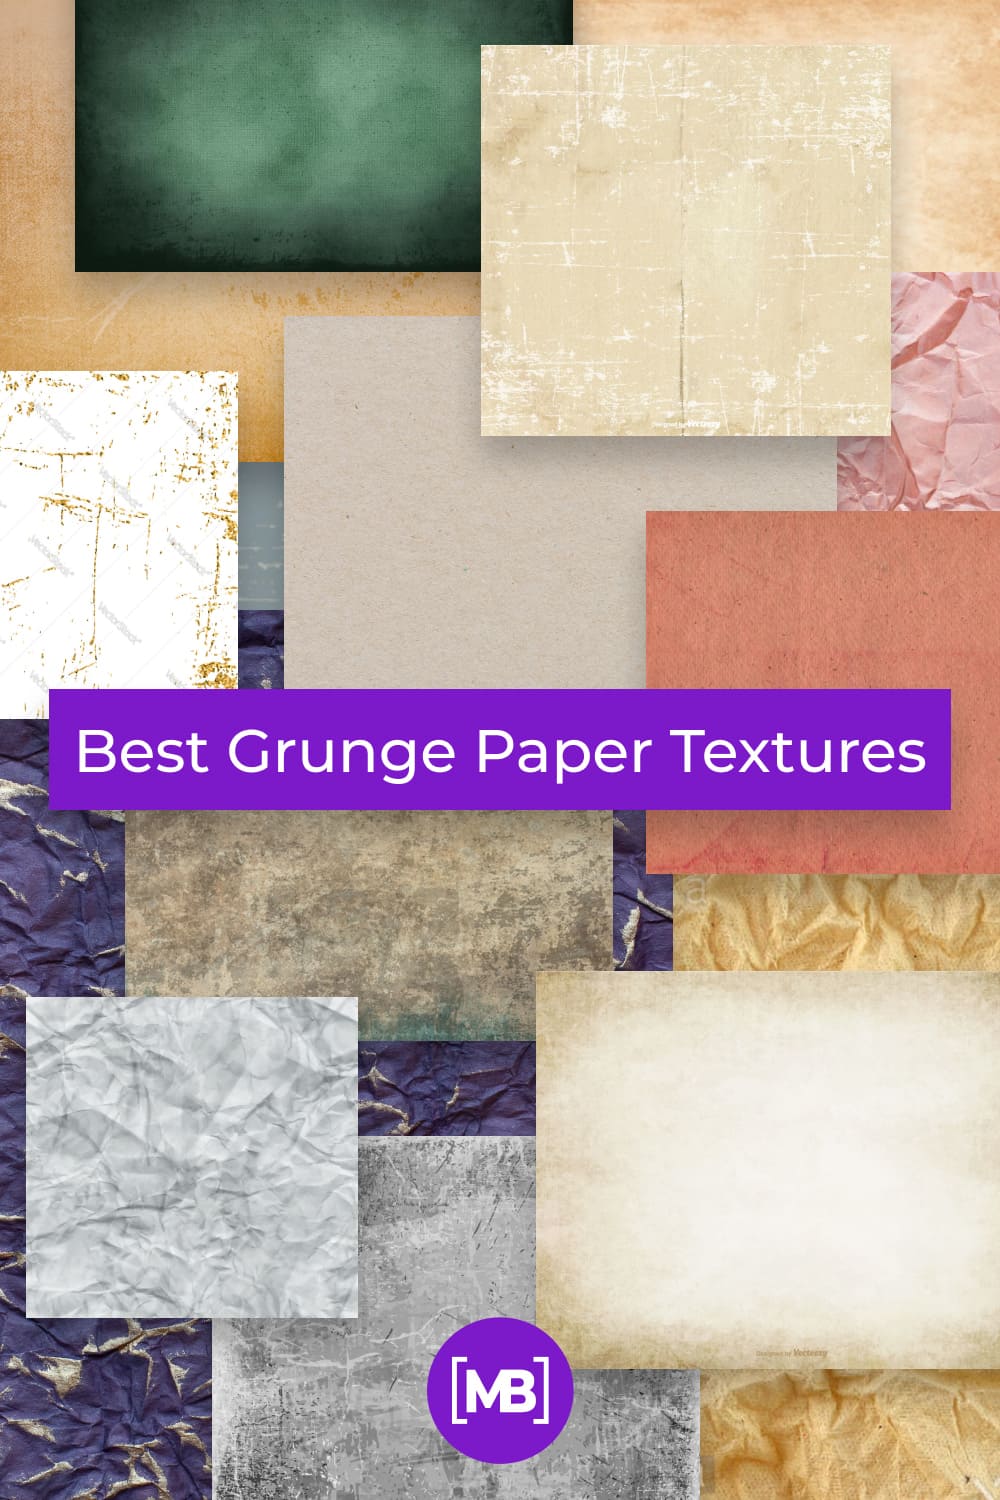 Grunge Paper Textures Pinterest.